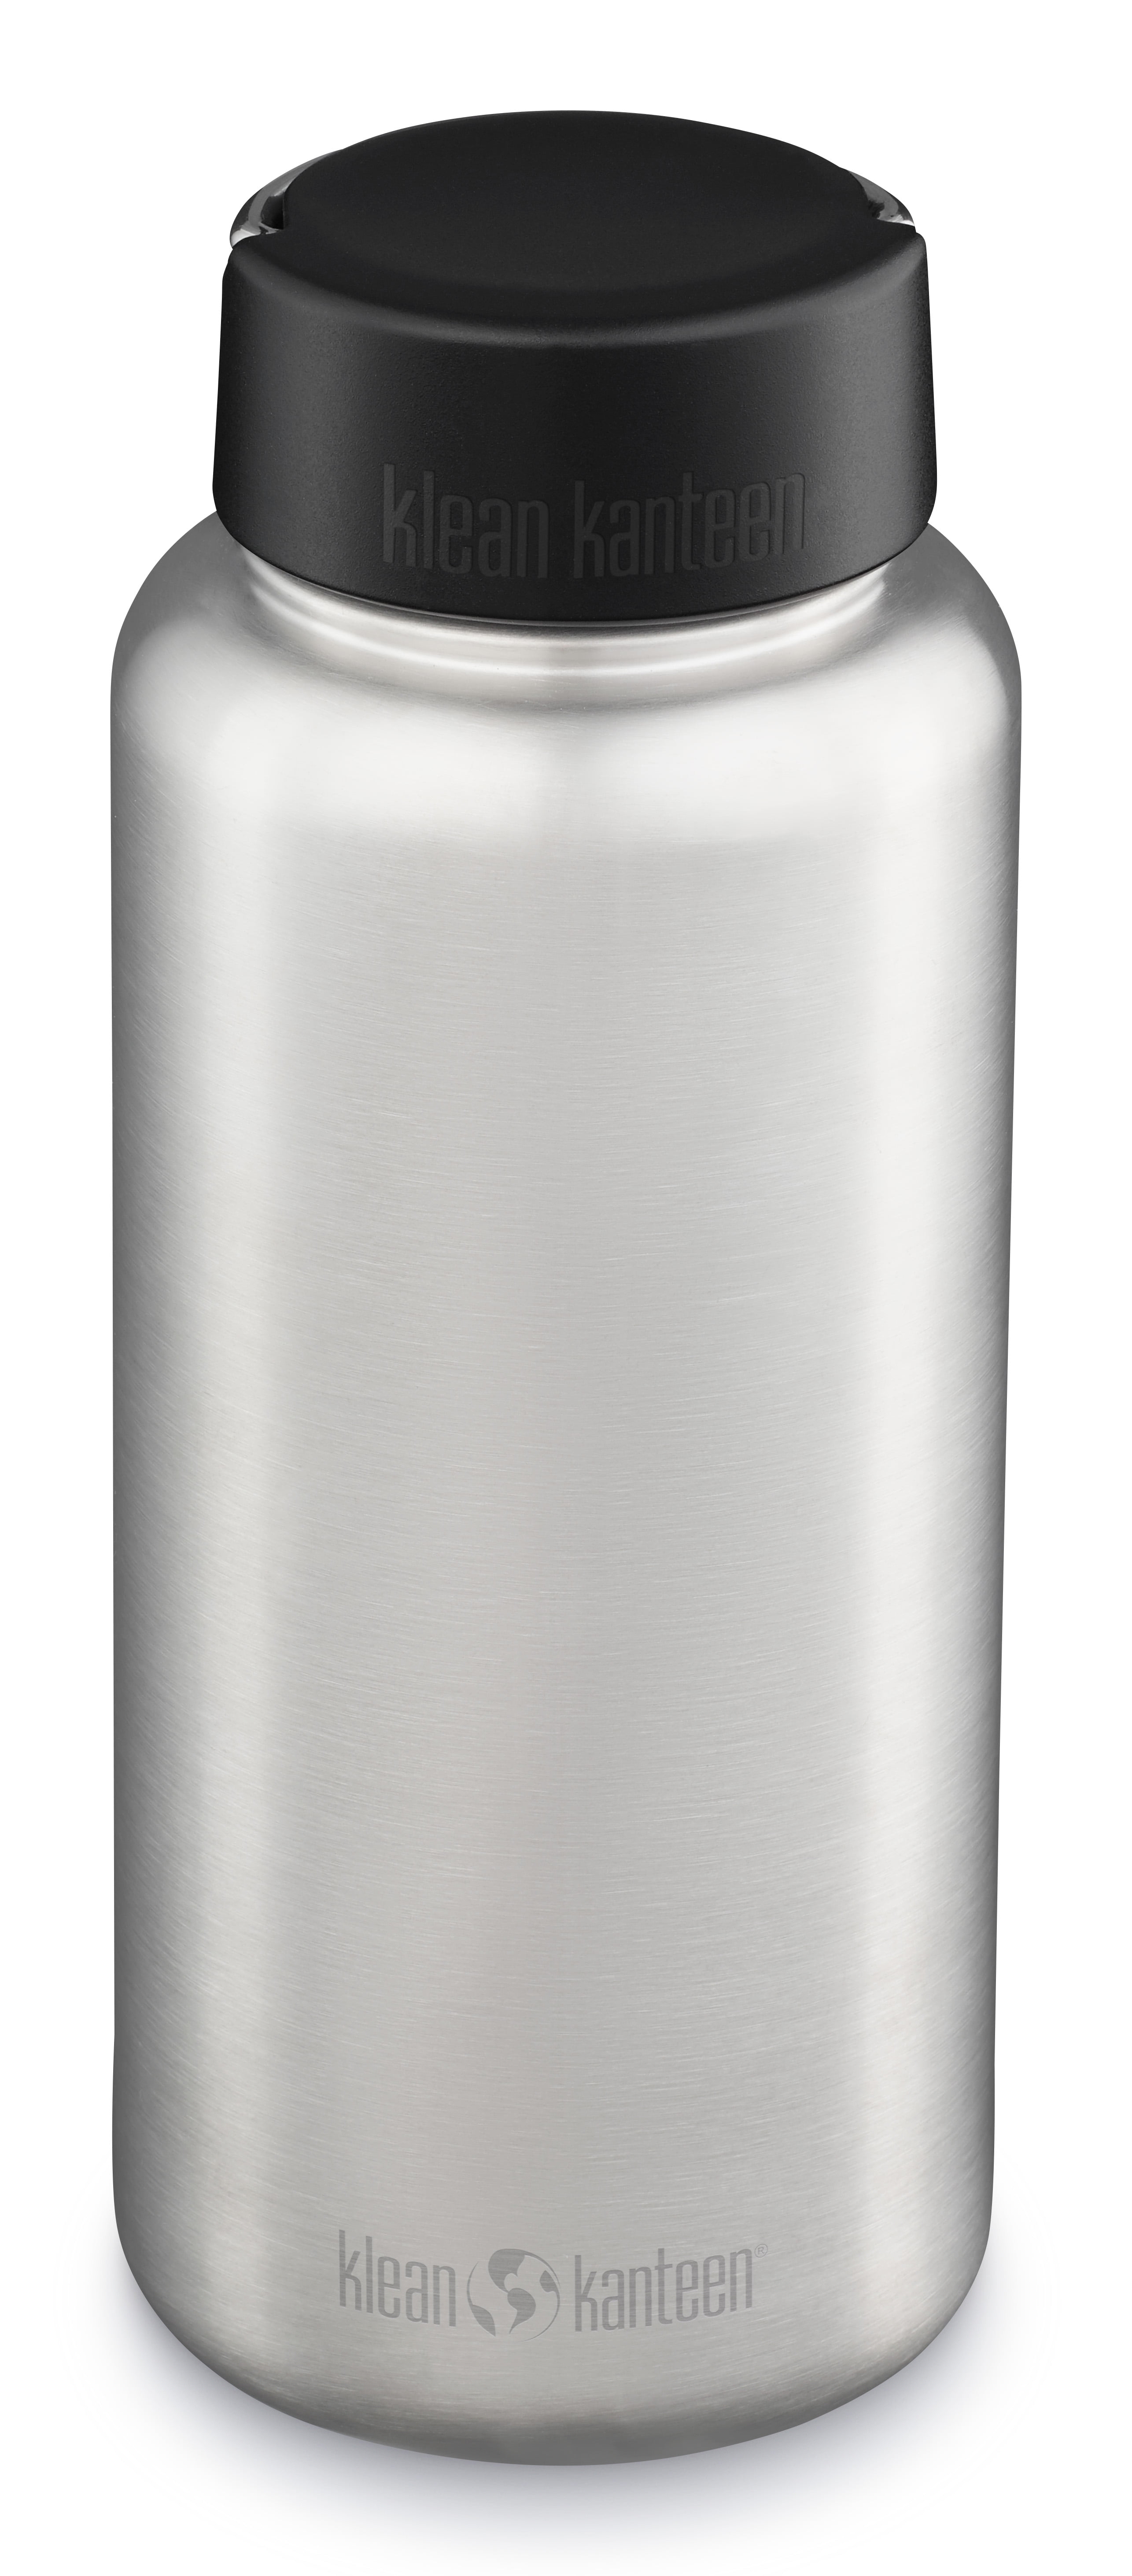 Yorker Bottle - 4 oz - LDPE - Spout Cap - Qty 25 (Cake Decorating